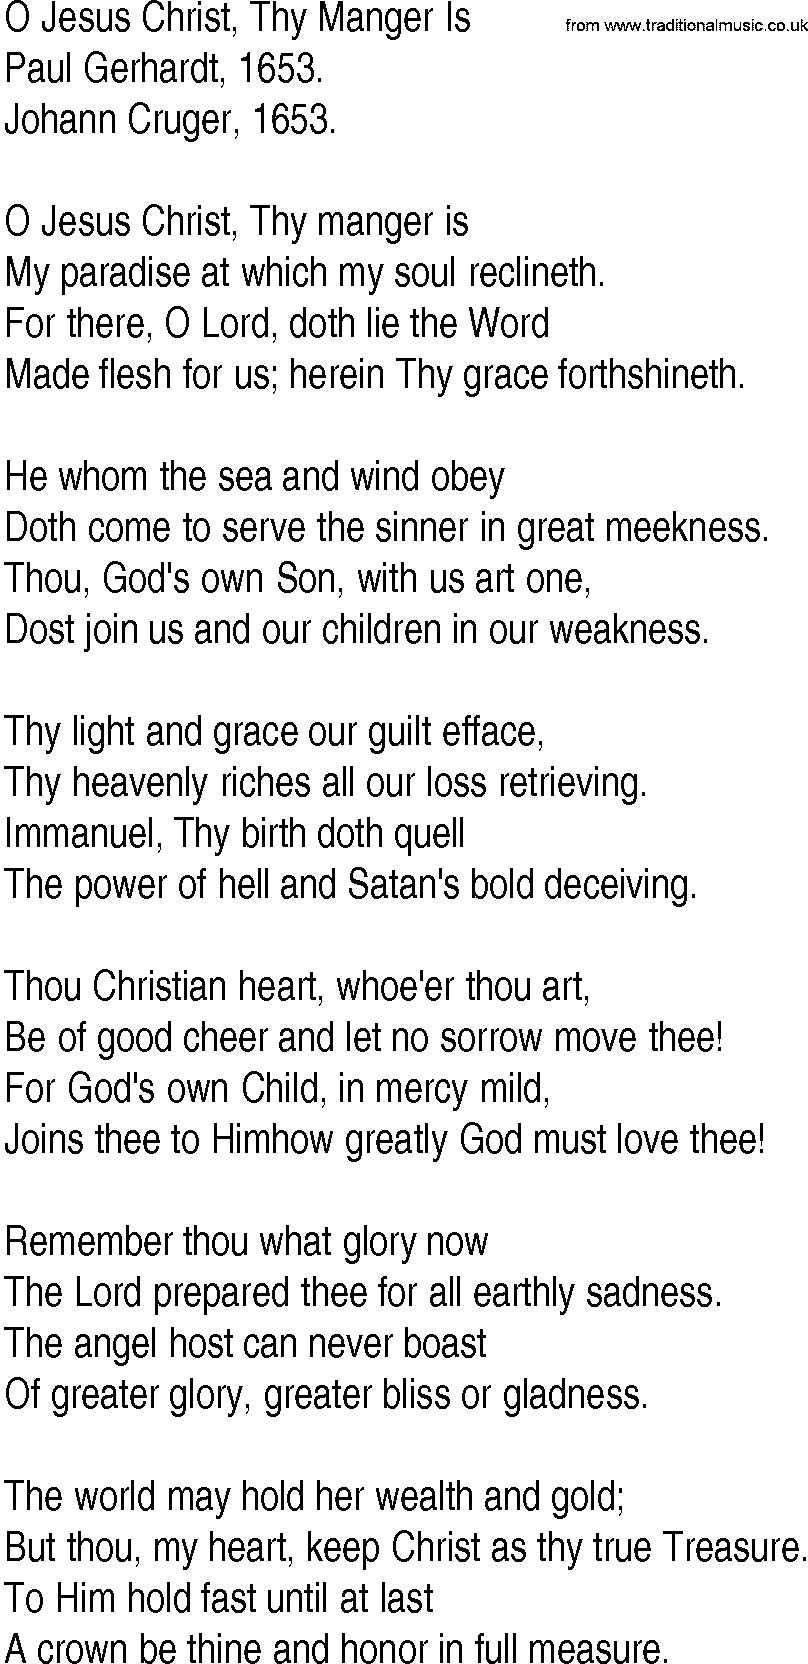 Hymn and Gospel Song: O Jesus Christ, Thy Manger Is by Paul Gerhardt lyrics